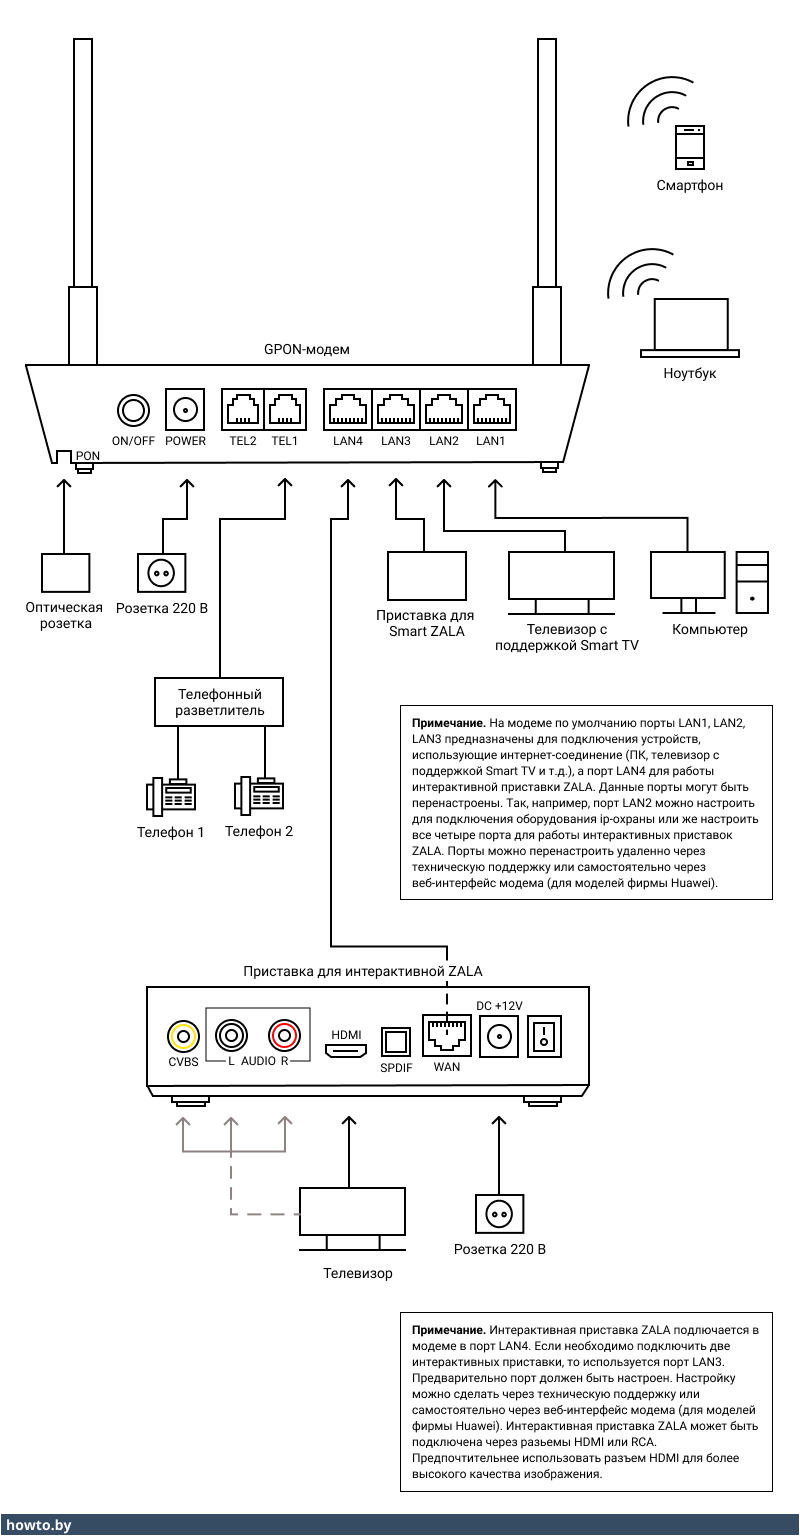 Схема подключения GPON-модема и интерактивной приставки ZALA